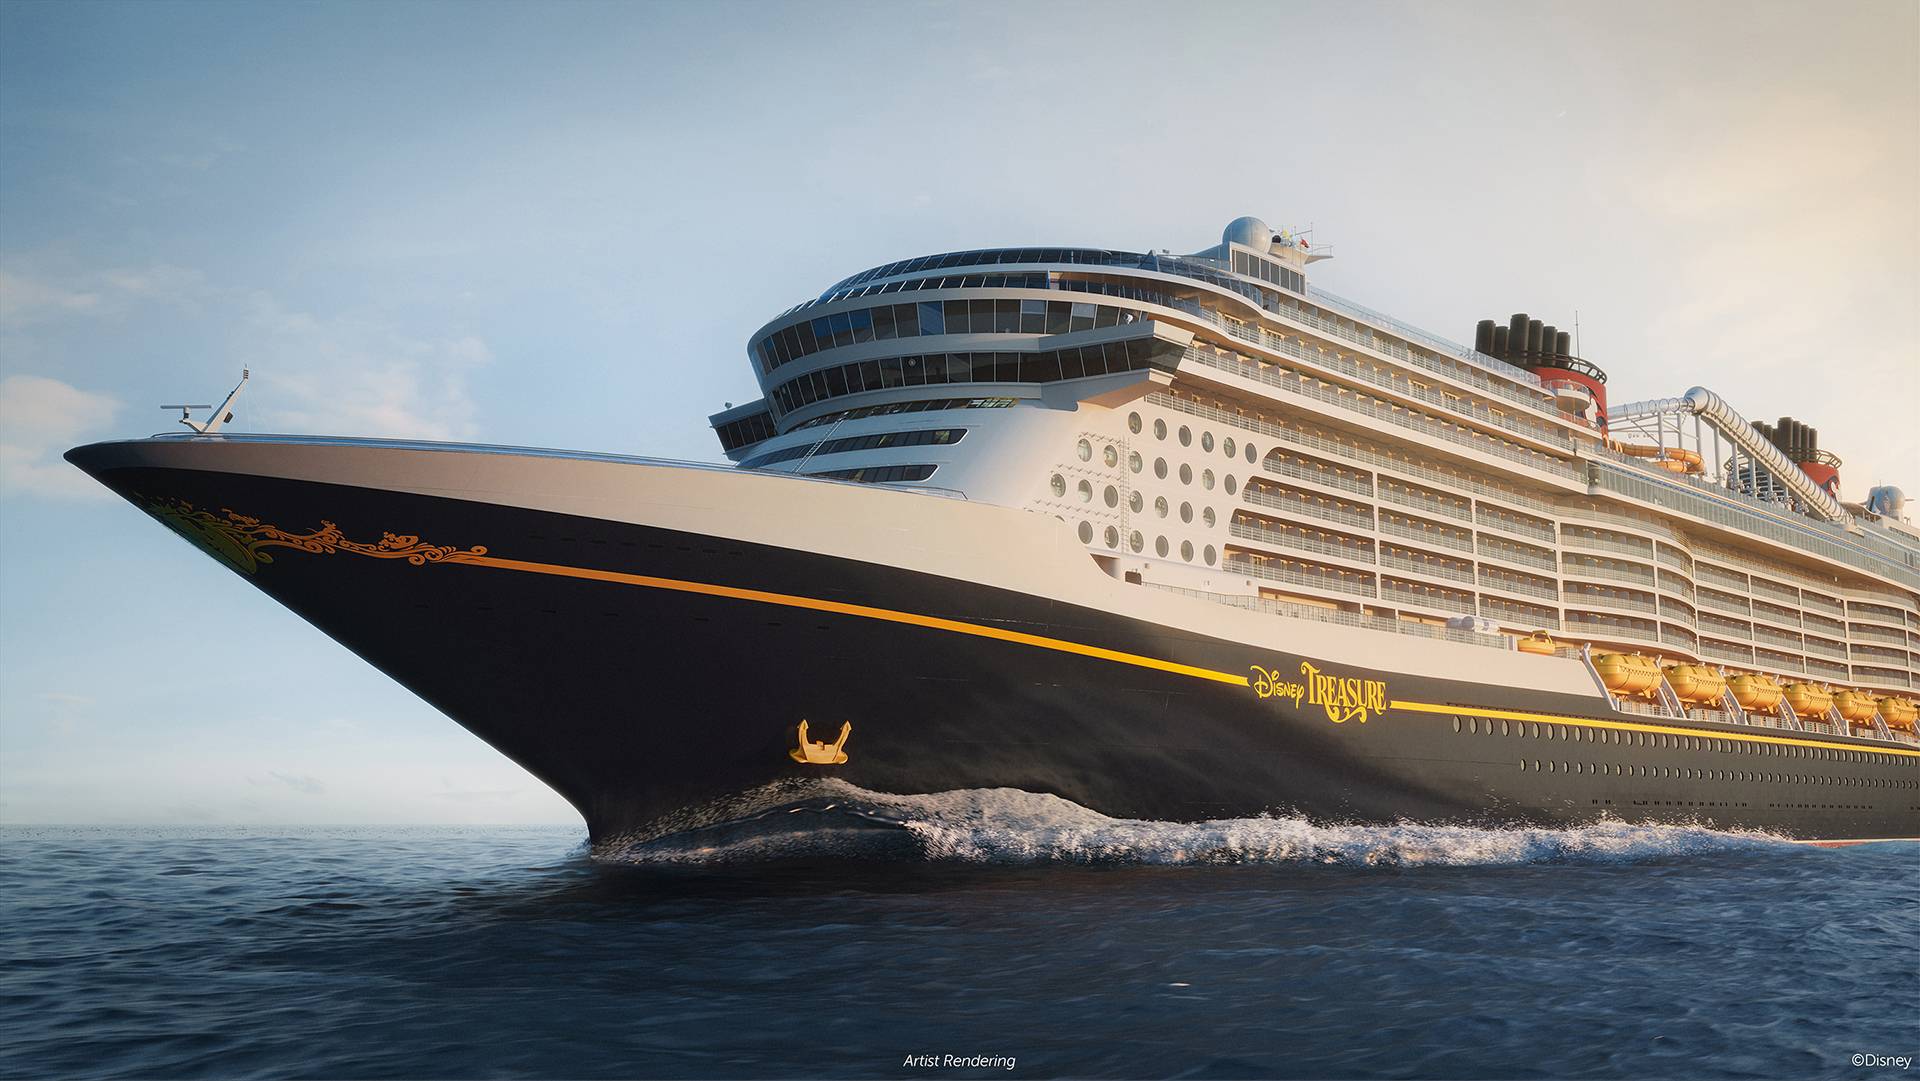 Disney Treasure, the sixth ship in the Disney Cruise Line fleet, will set sail in 2024